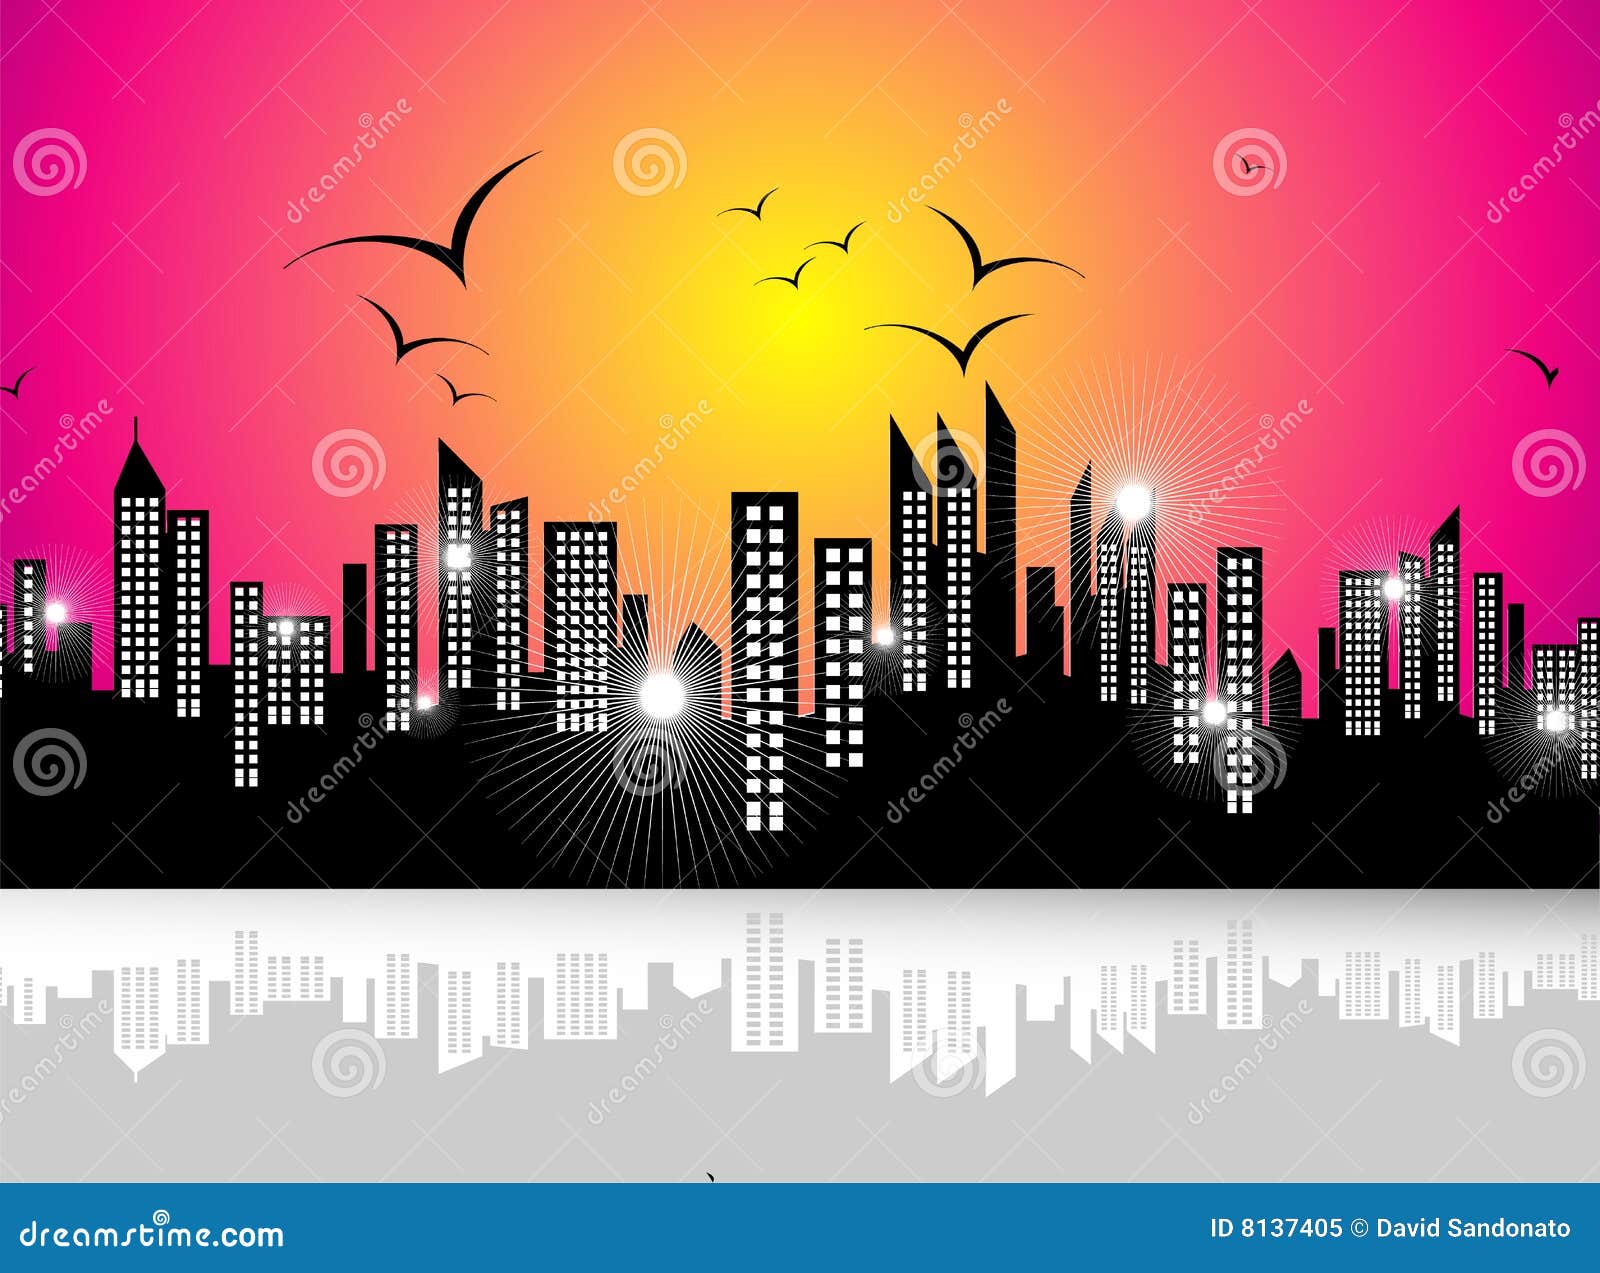 Urban Skyscrapers Landscape Stock Vector - Illustration of design ...